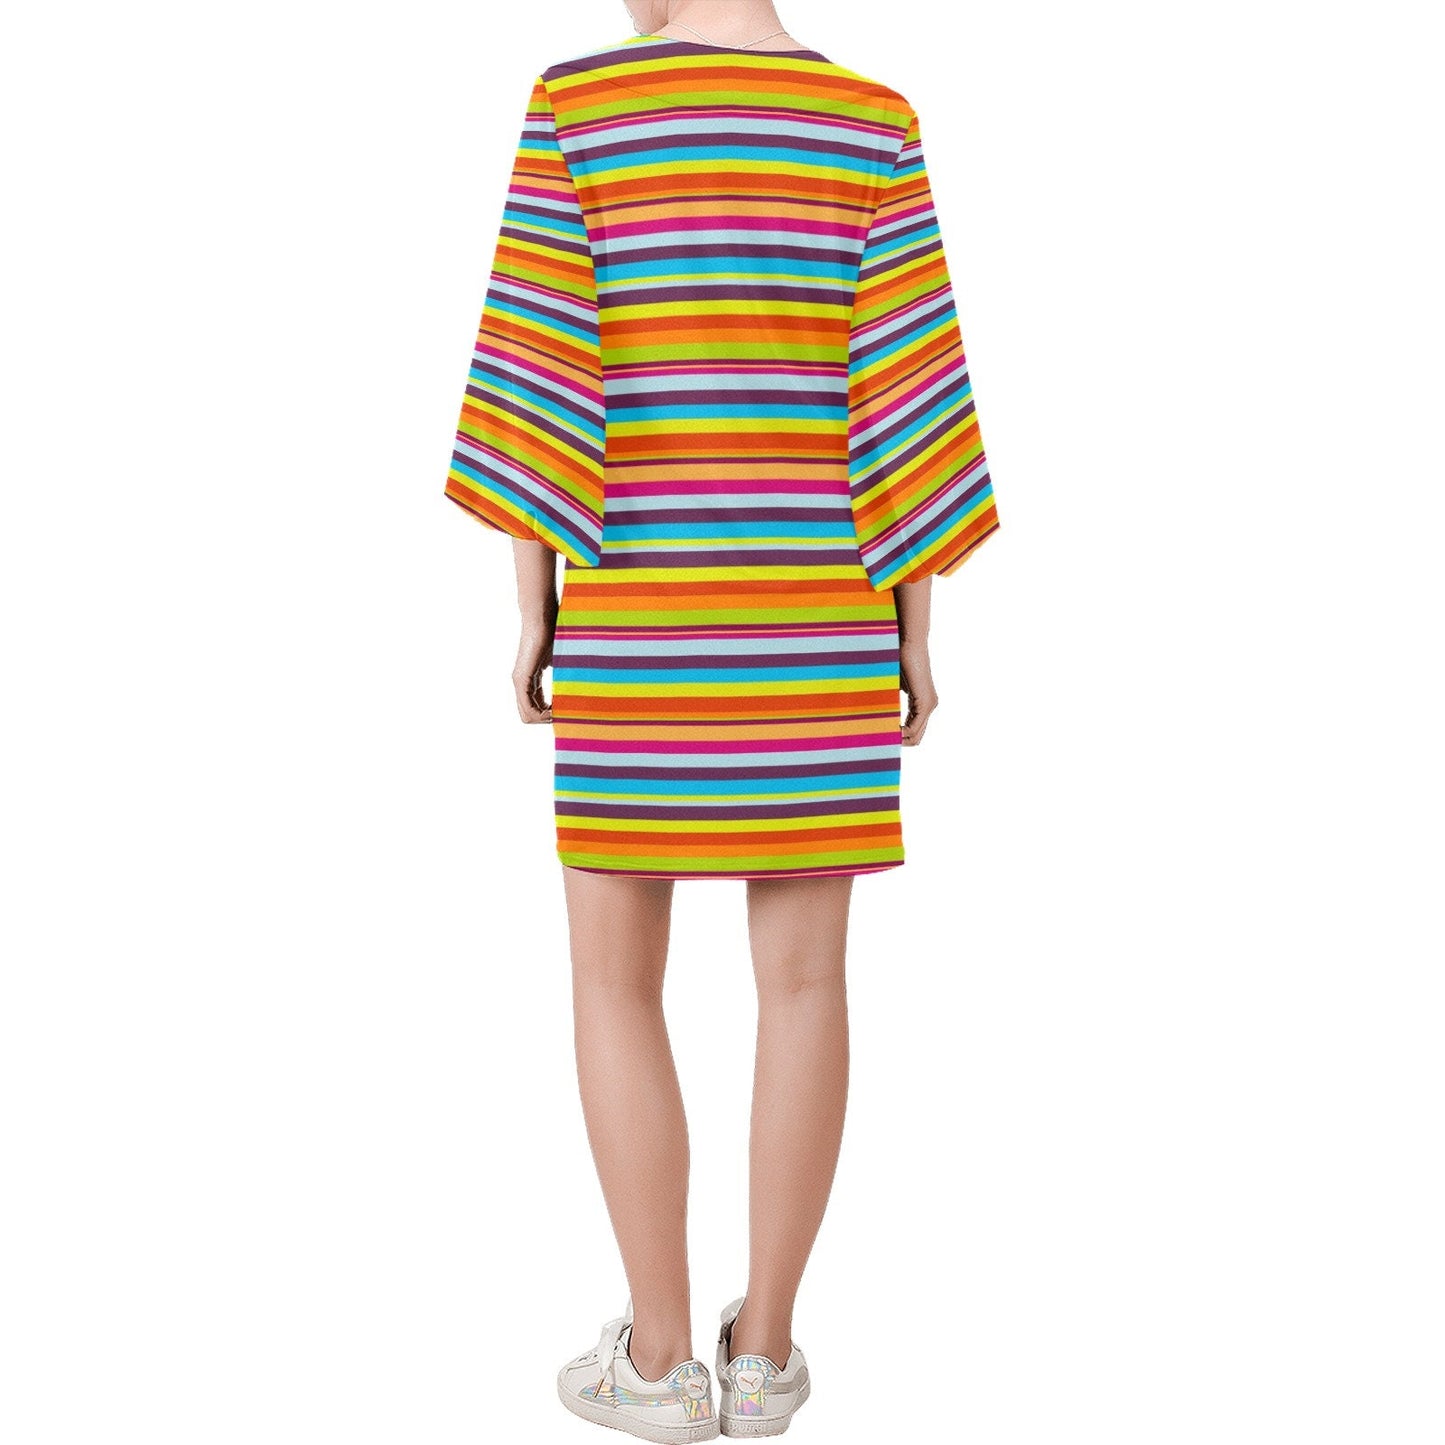 Stripe Dress, Retro Dress, Retro Dress, 70s style dress,Bell sleeve dress,Multicolor Stripe Dress,Hippie Dress, Shift Dress,Vintage inspired